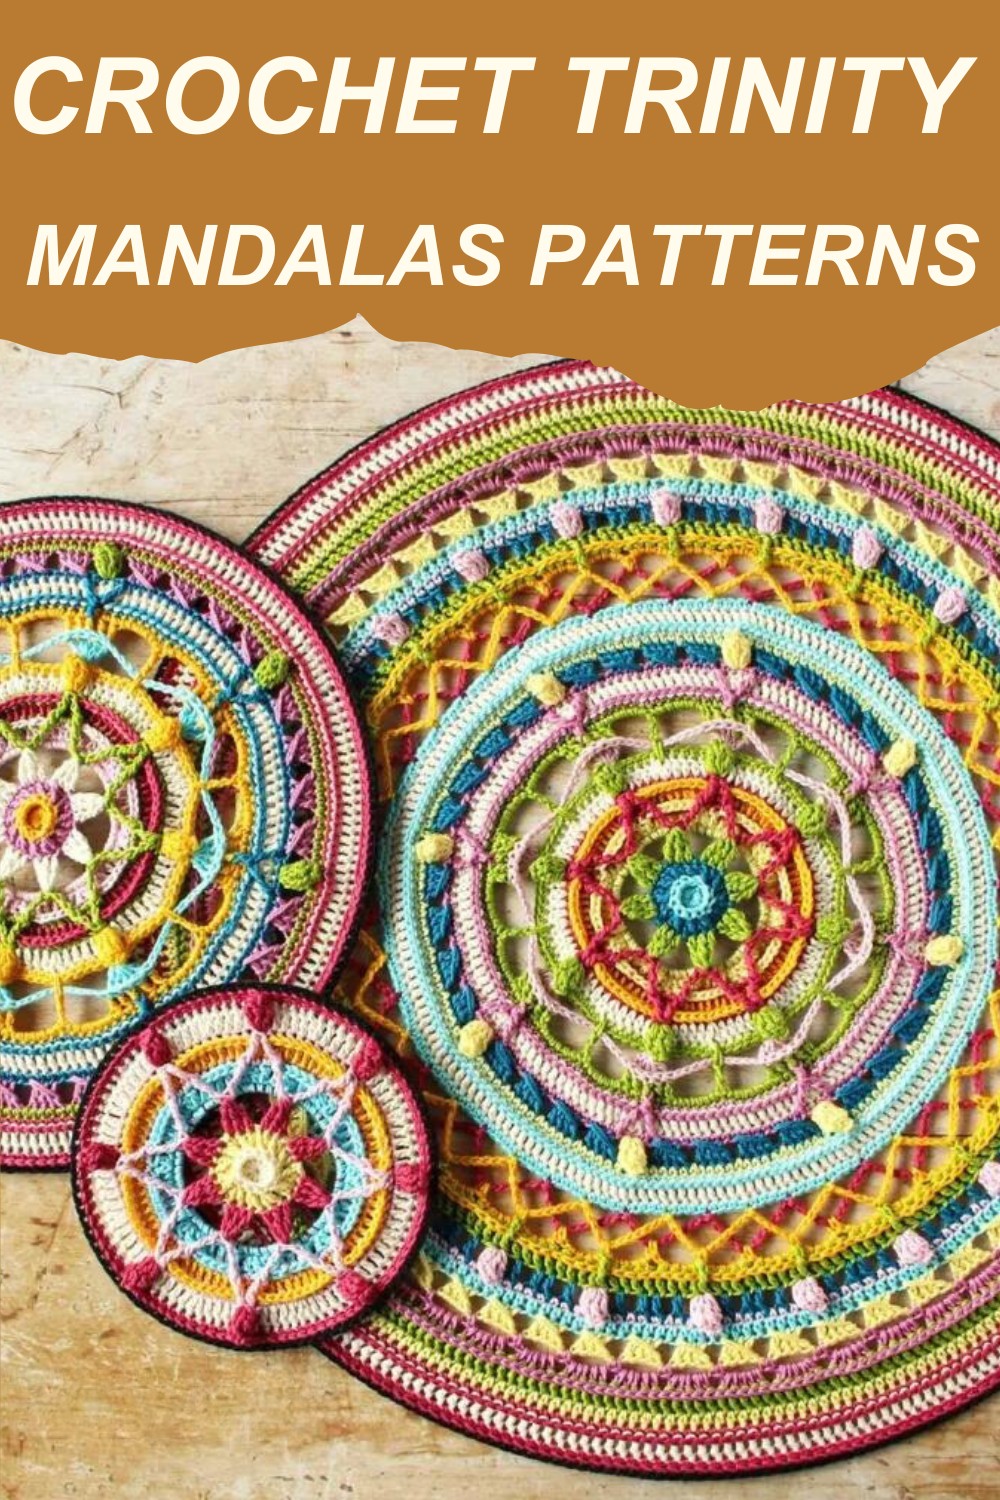 Crochet Trinity Mandalas Patterns